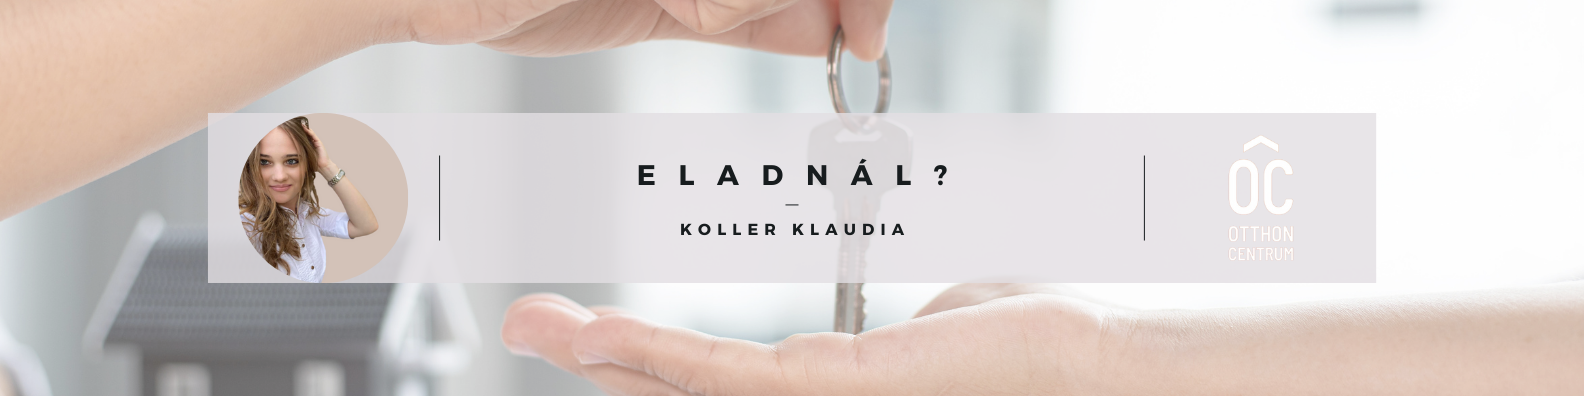 Koller Klaudia/Eladnék